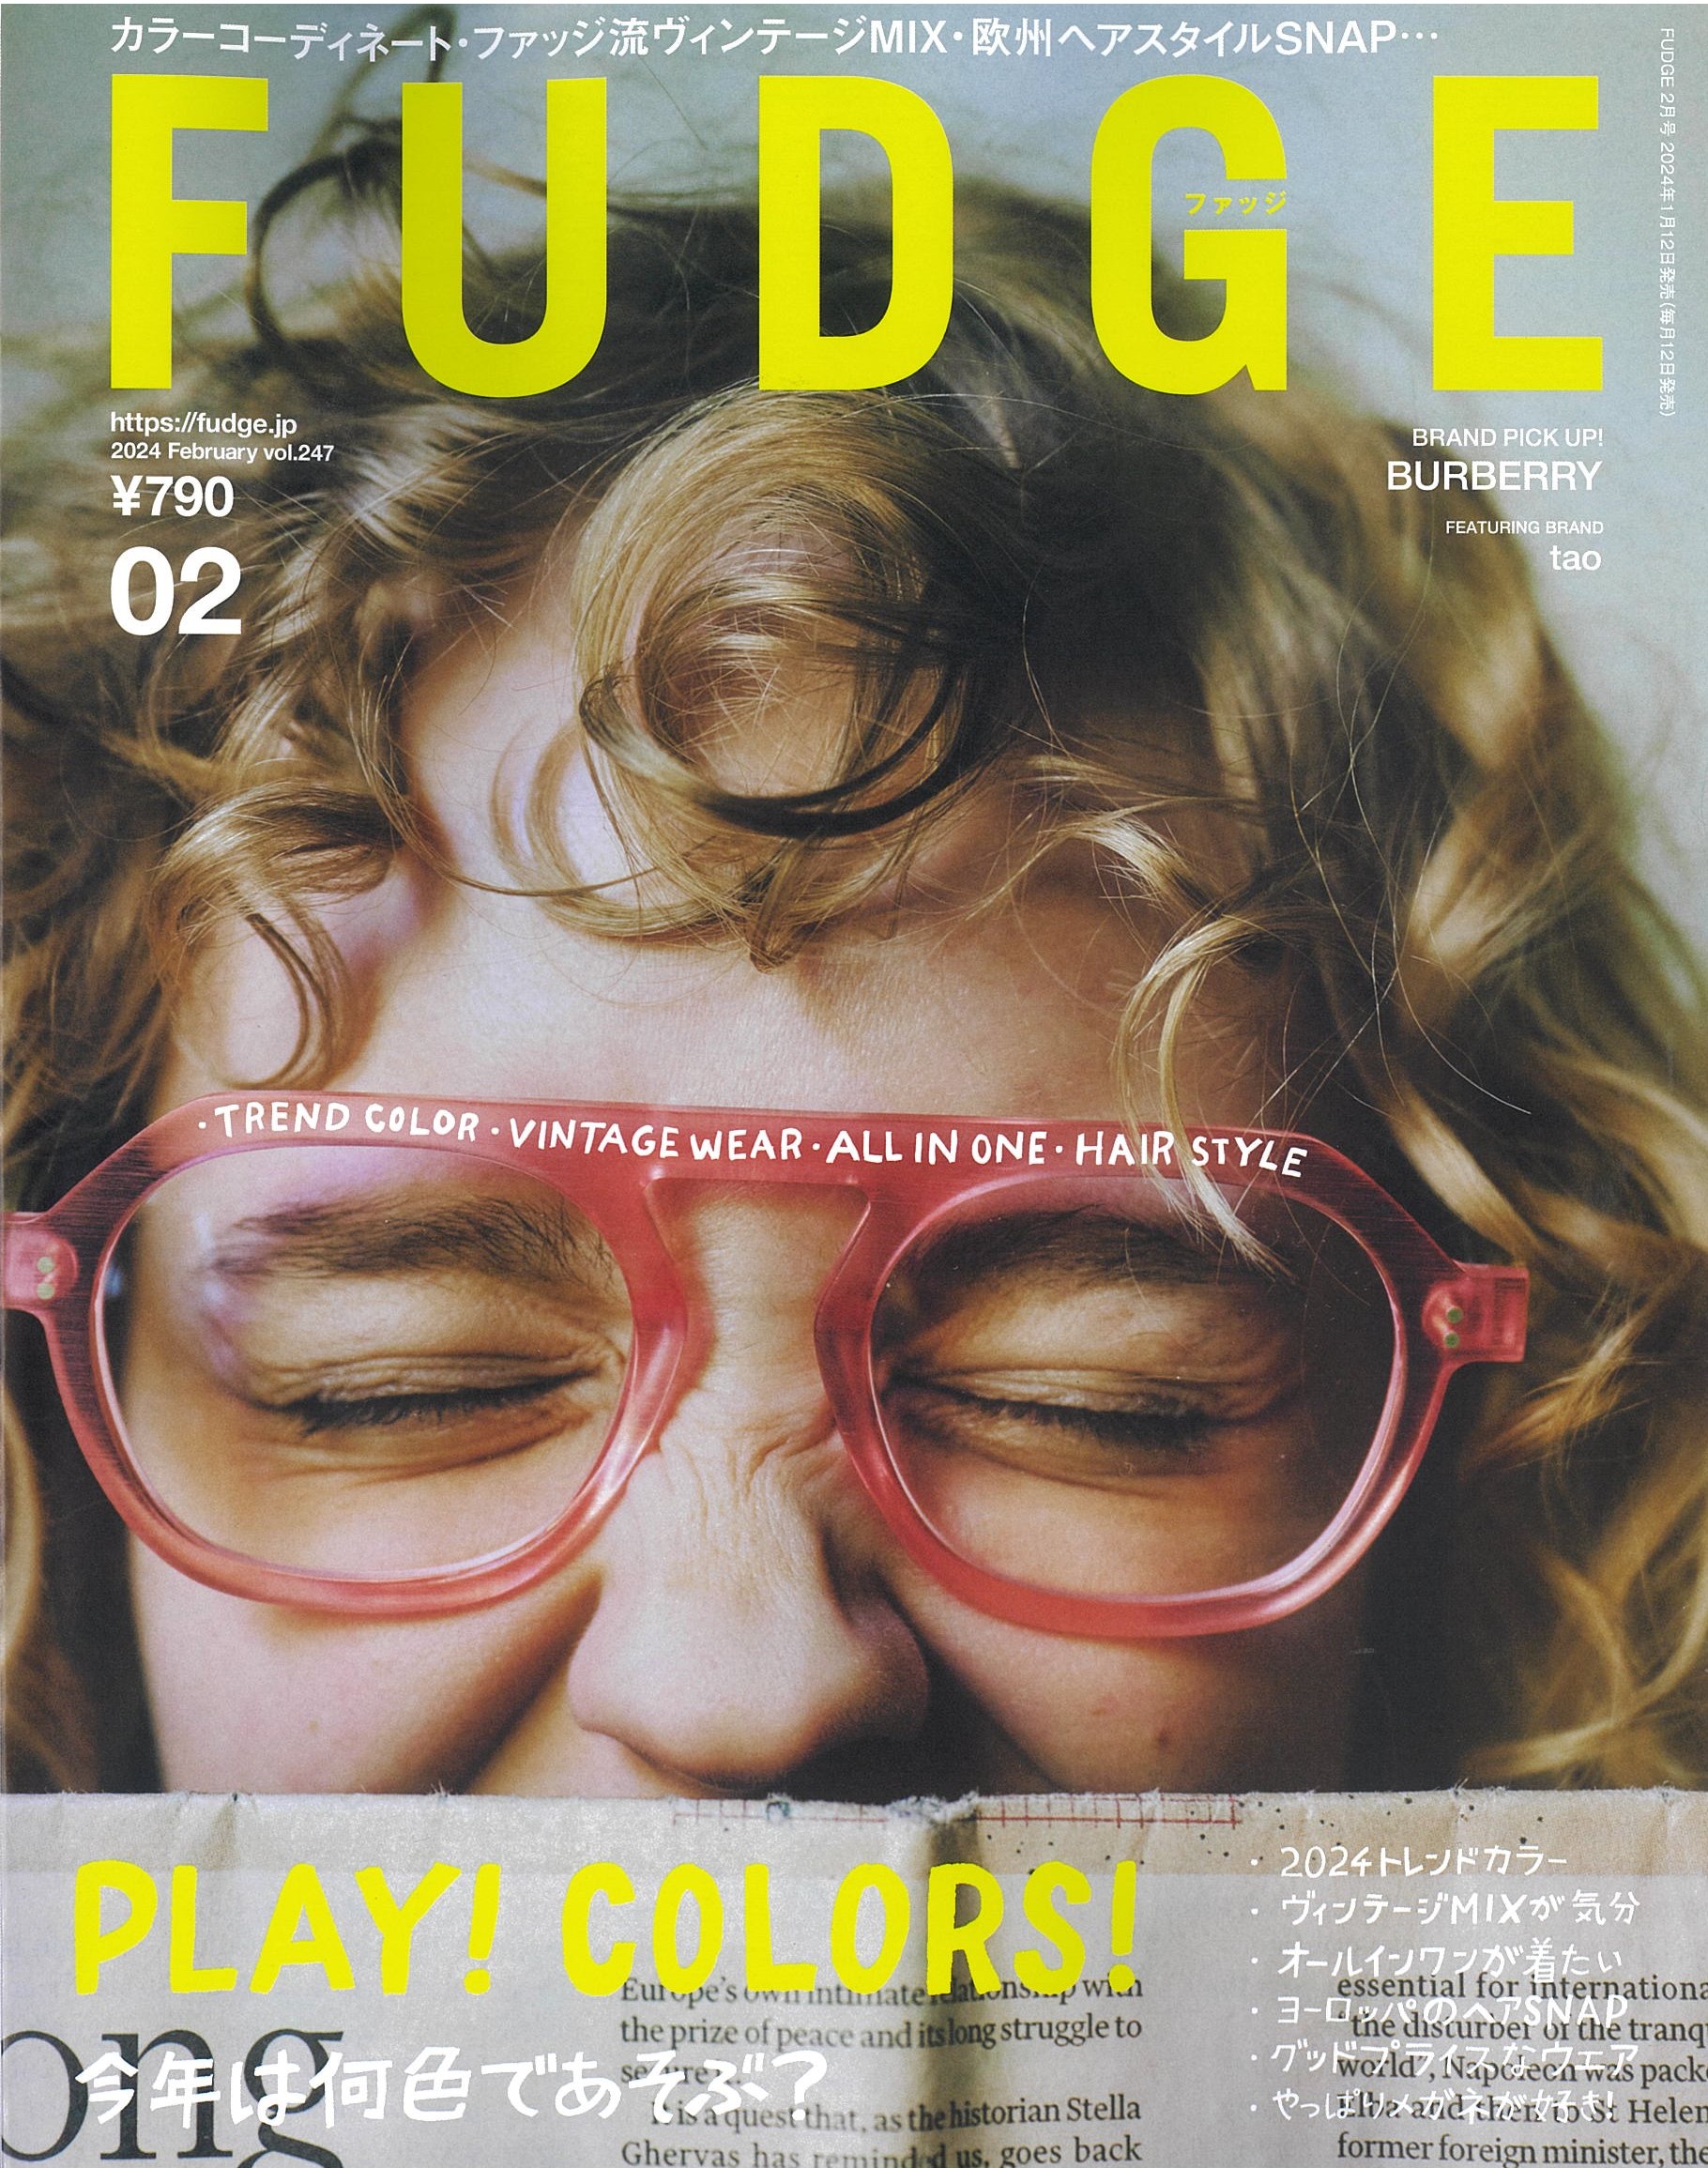 Launer London handbag is introduced in 『FUDGE』 magazine.